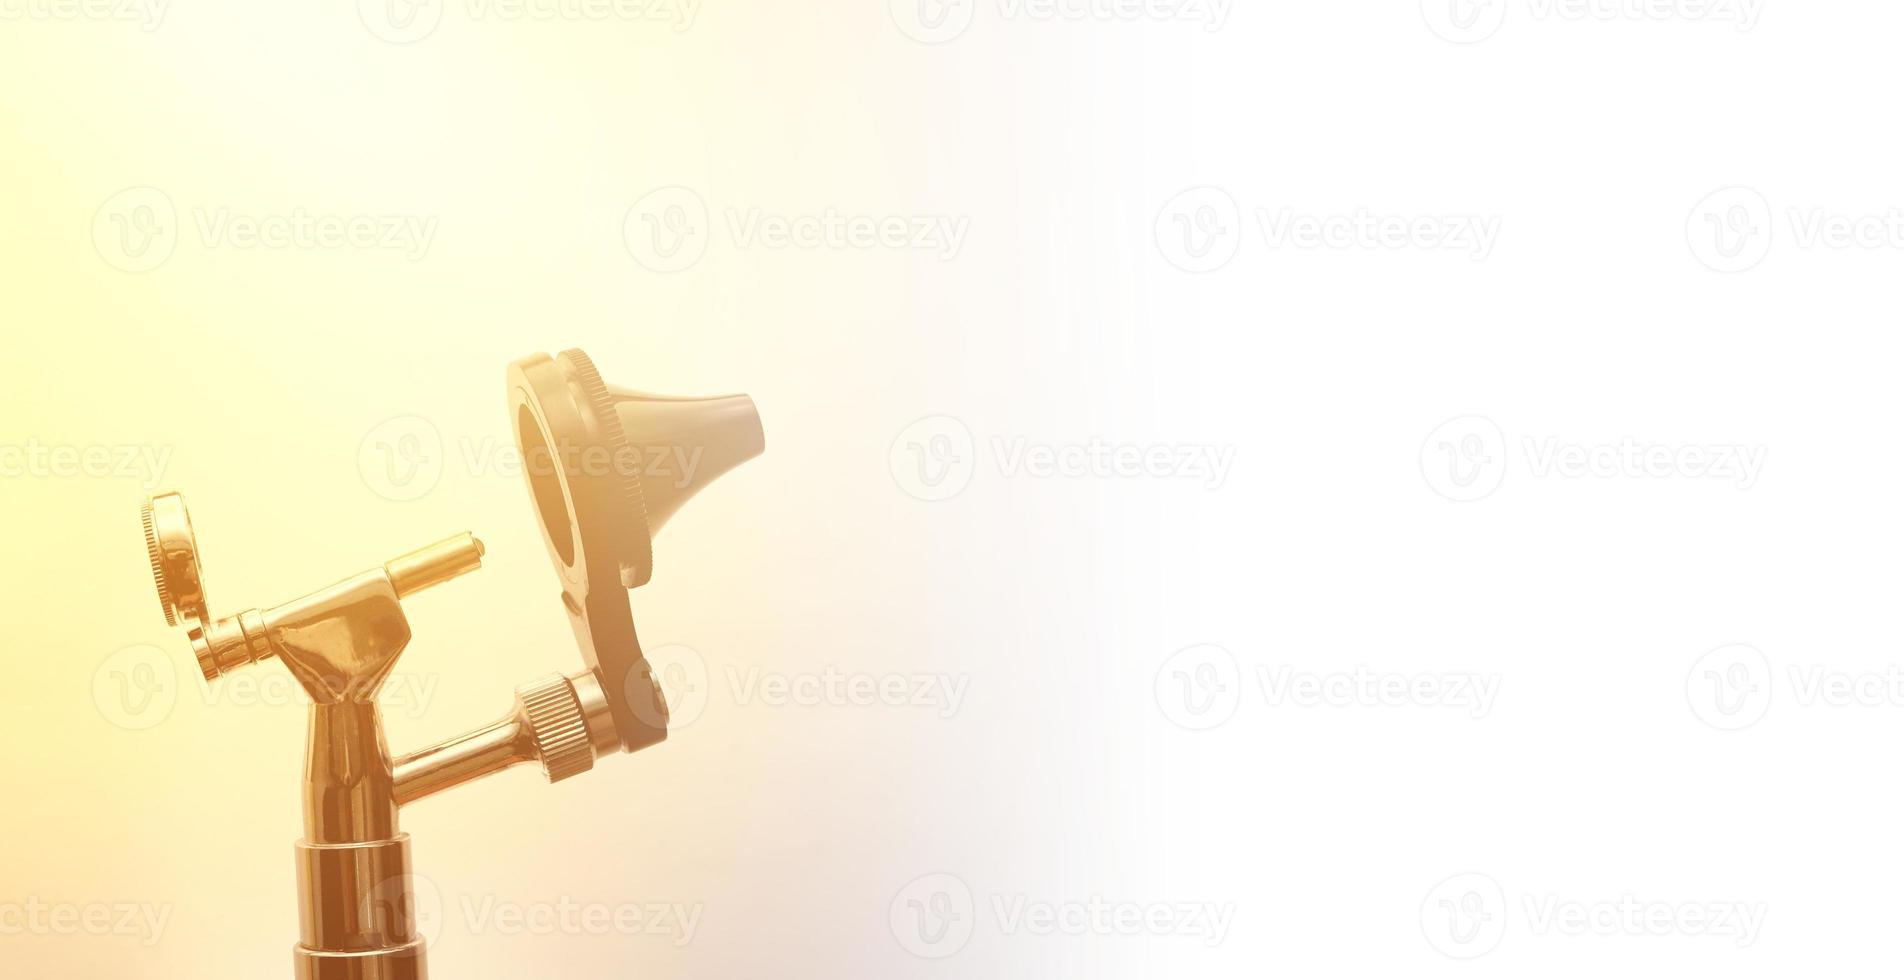 Otoscopio para otorrinolaringología examen oído cabeza pieza cónica vista sobre fondo blanco con destello de sol foto